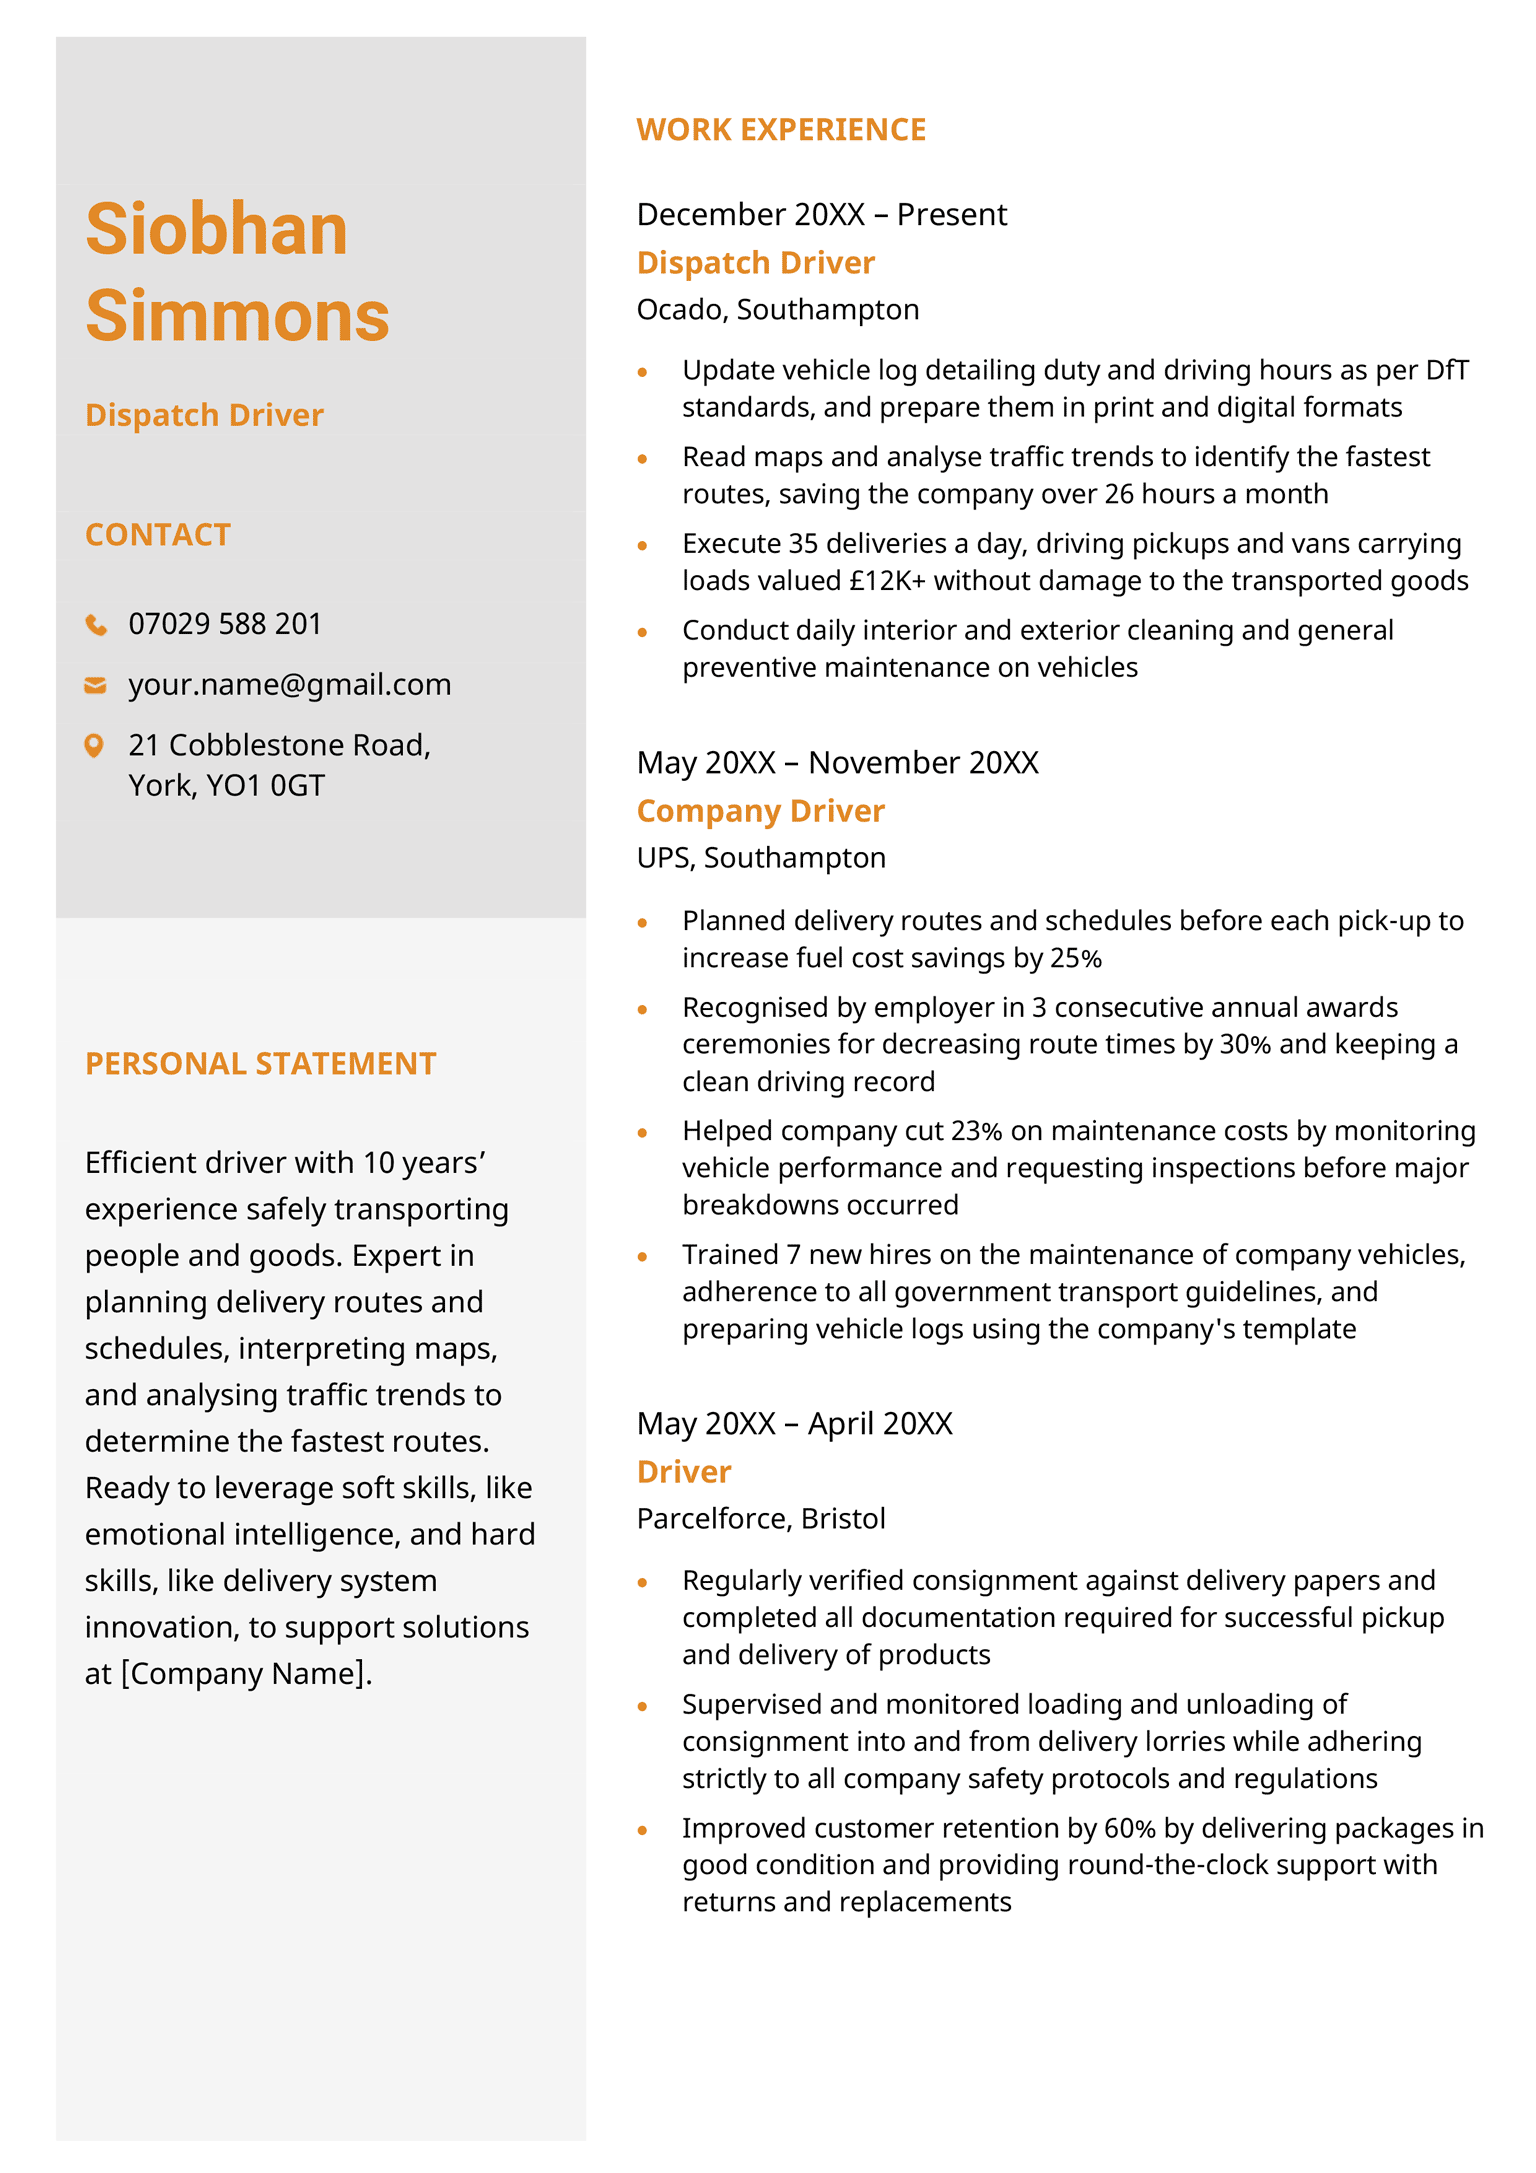 The Worcester CV template in orange.